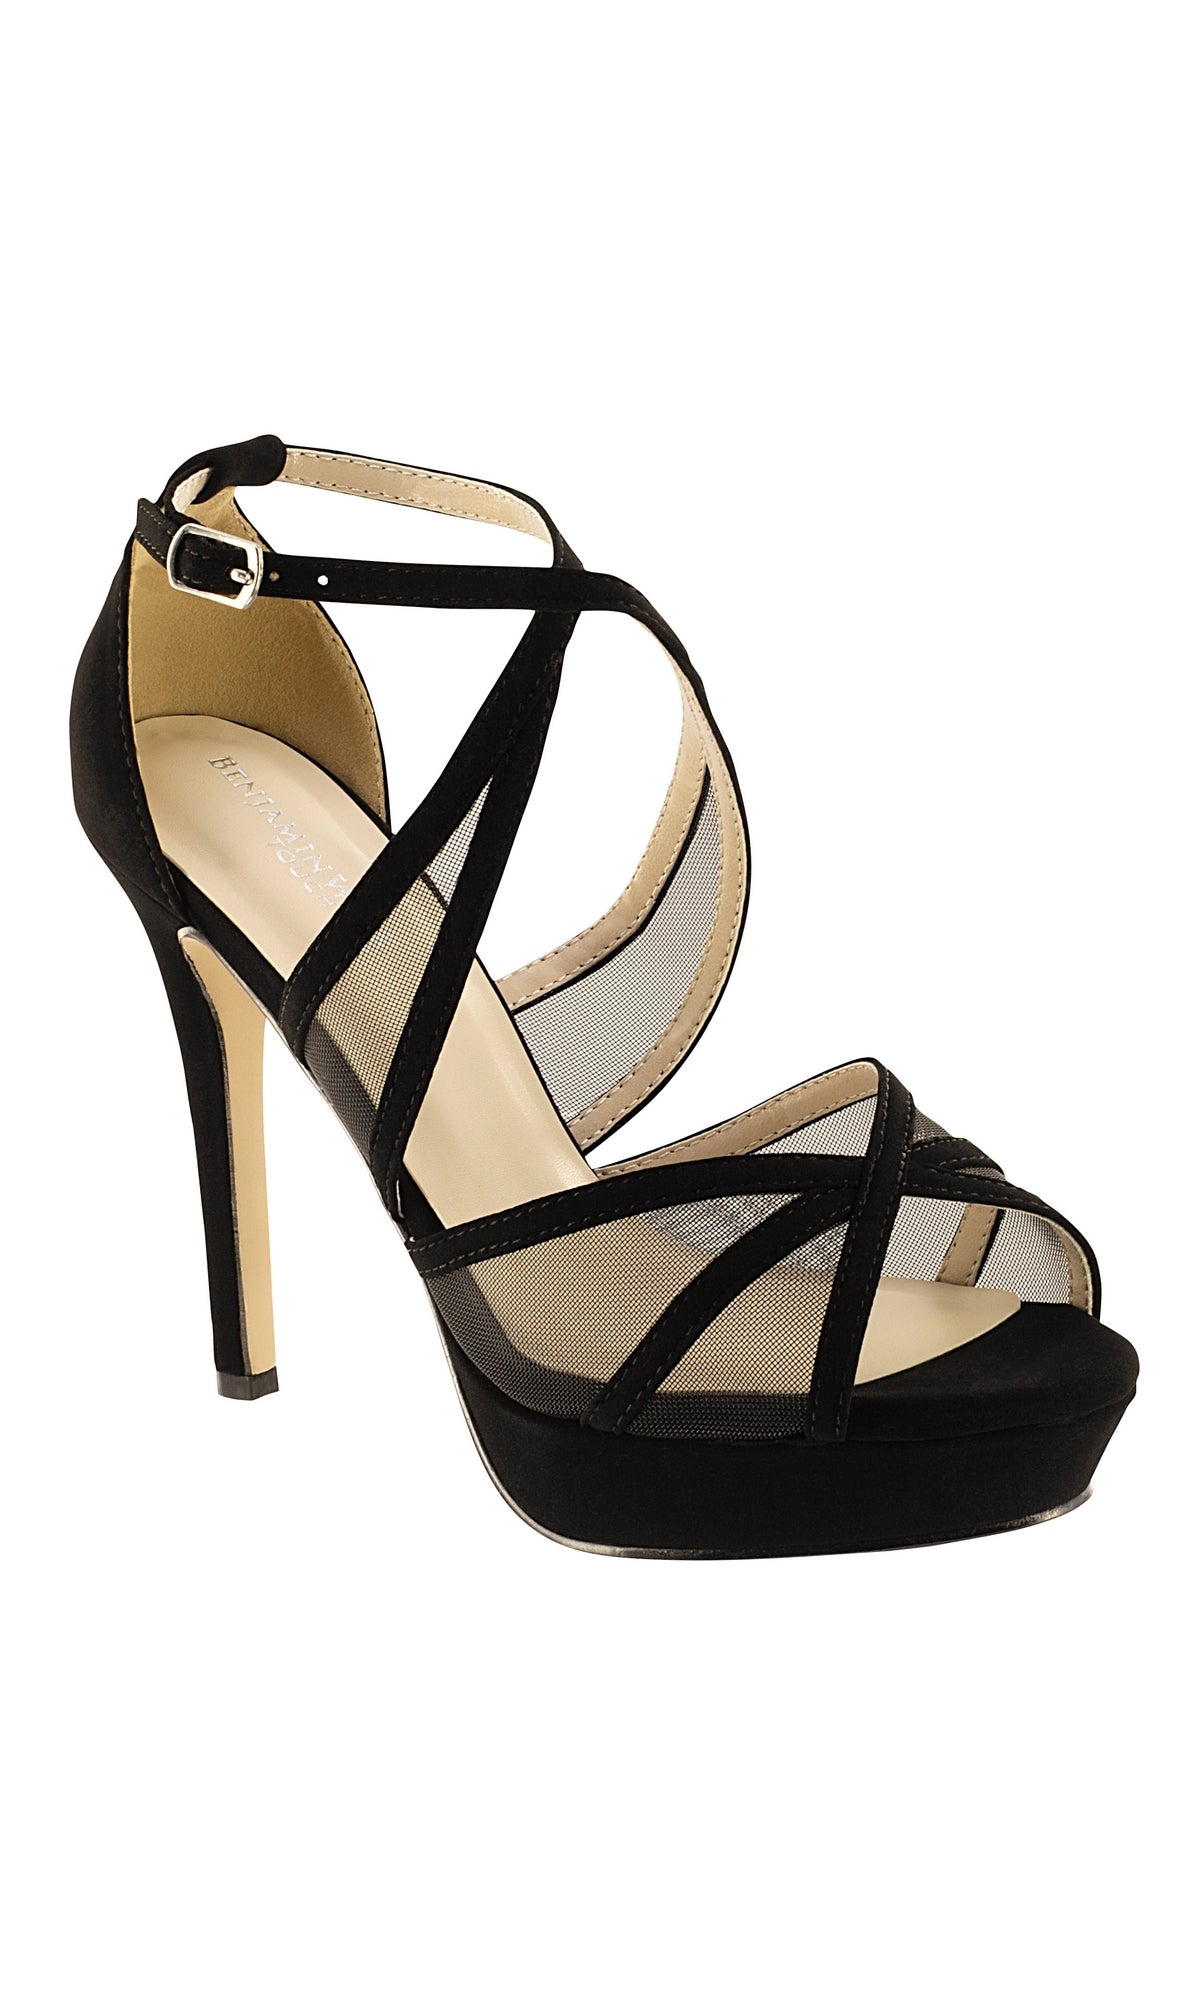 Plot Twist Heel - Black | Platform high heels, Heels, Homecoming shoes